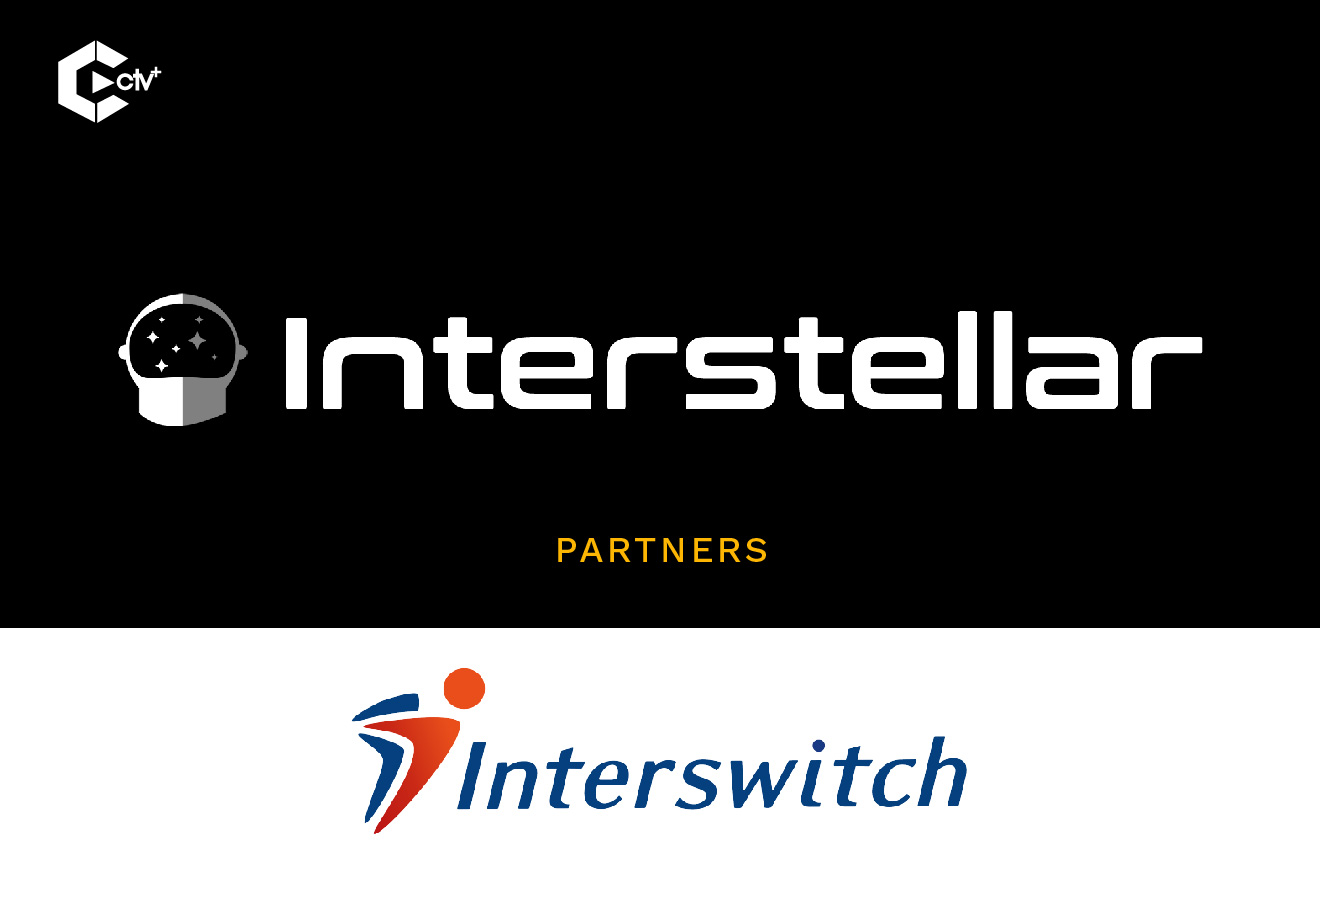 interstellar partners with Interswitch